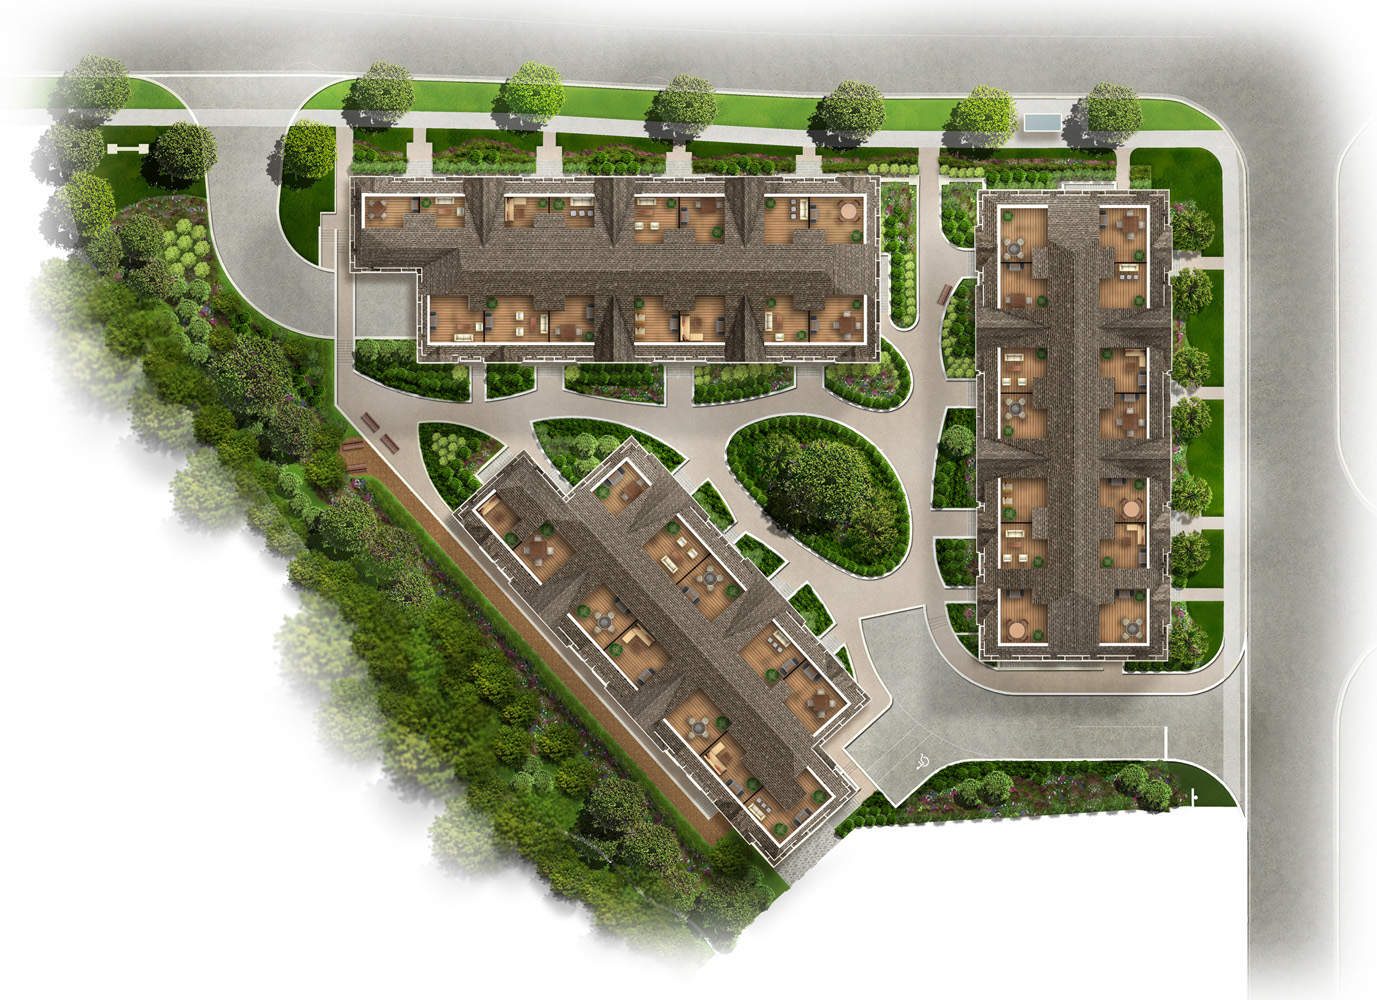 Site Plan Rendering - New Townhouse Development